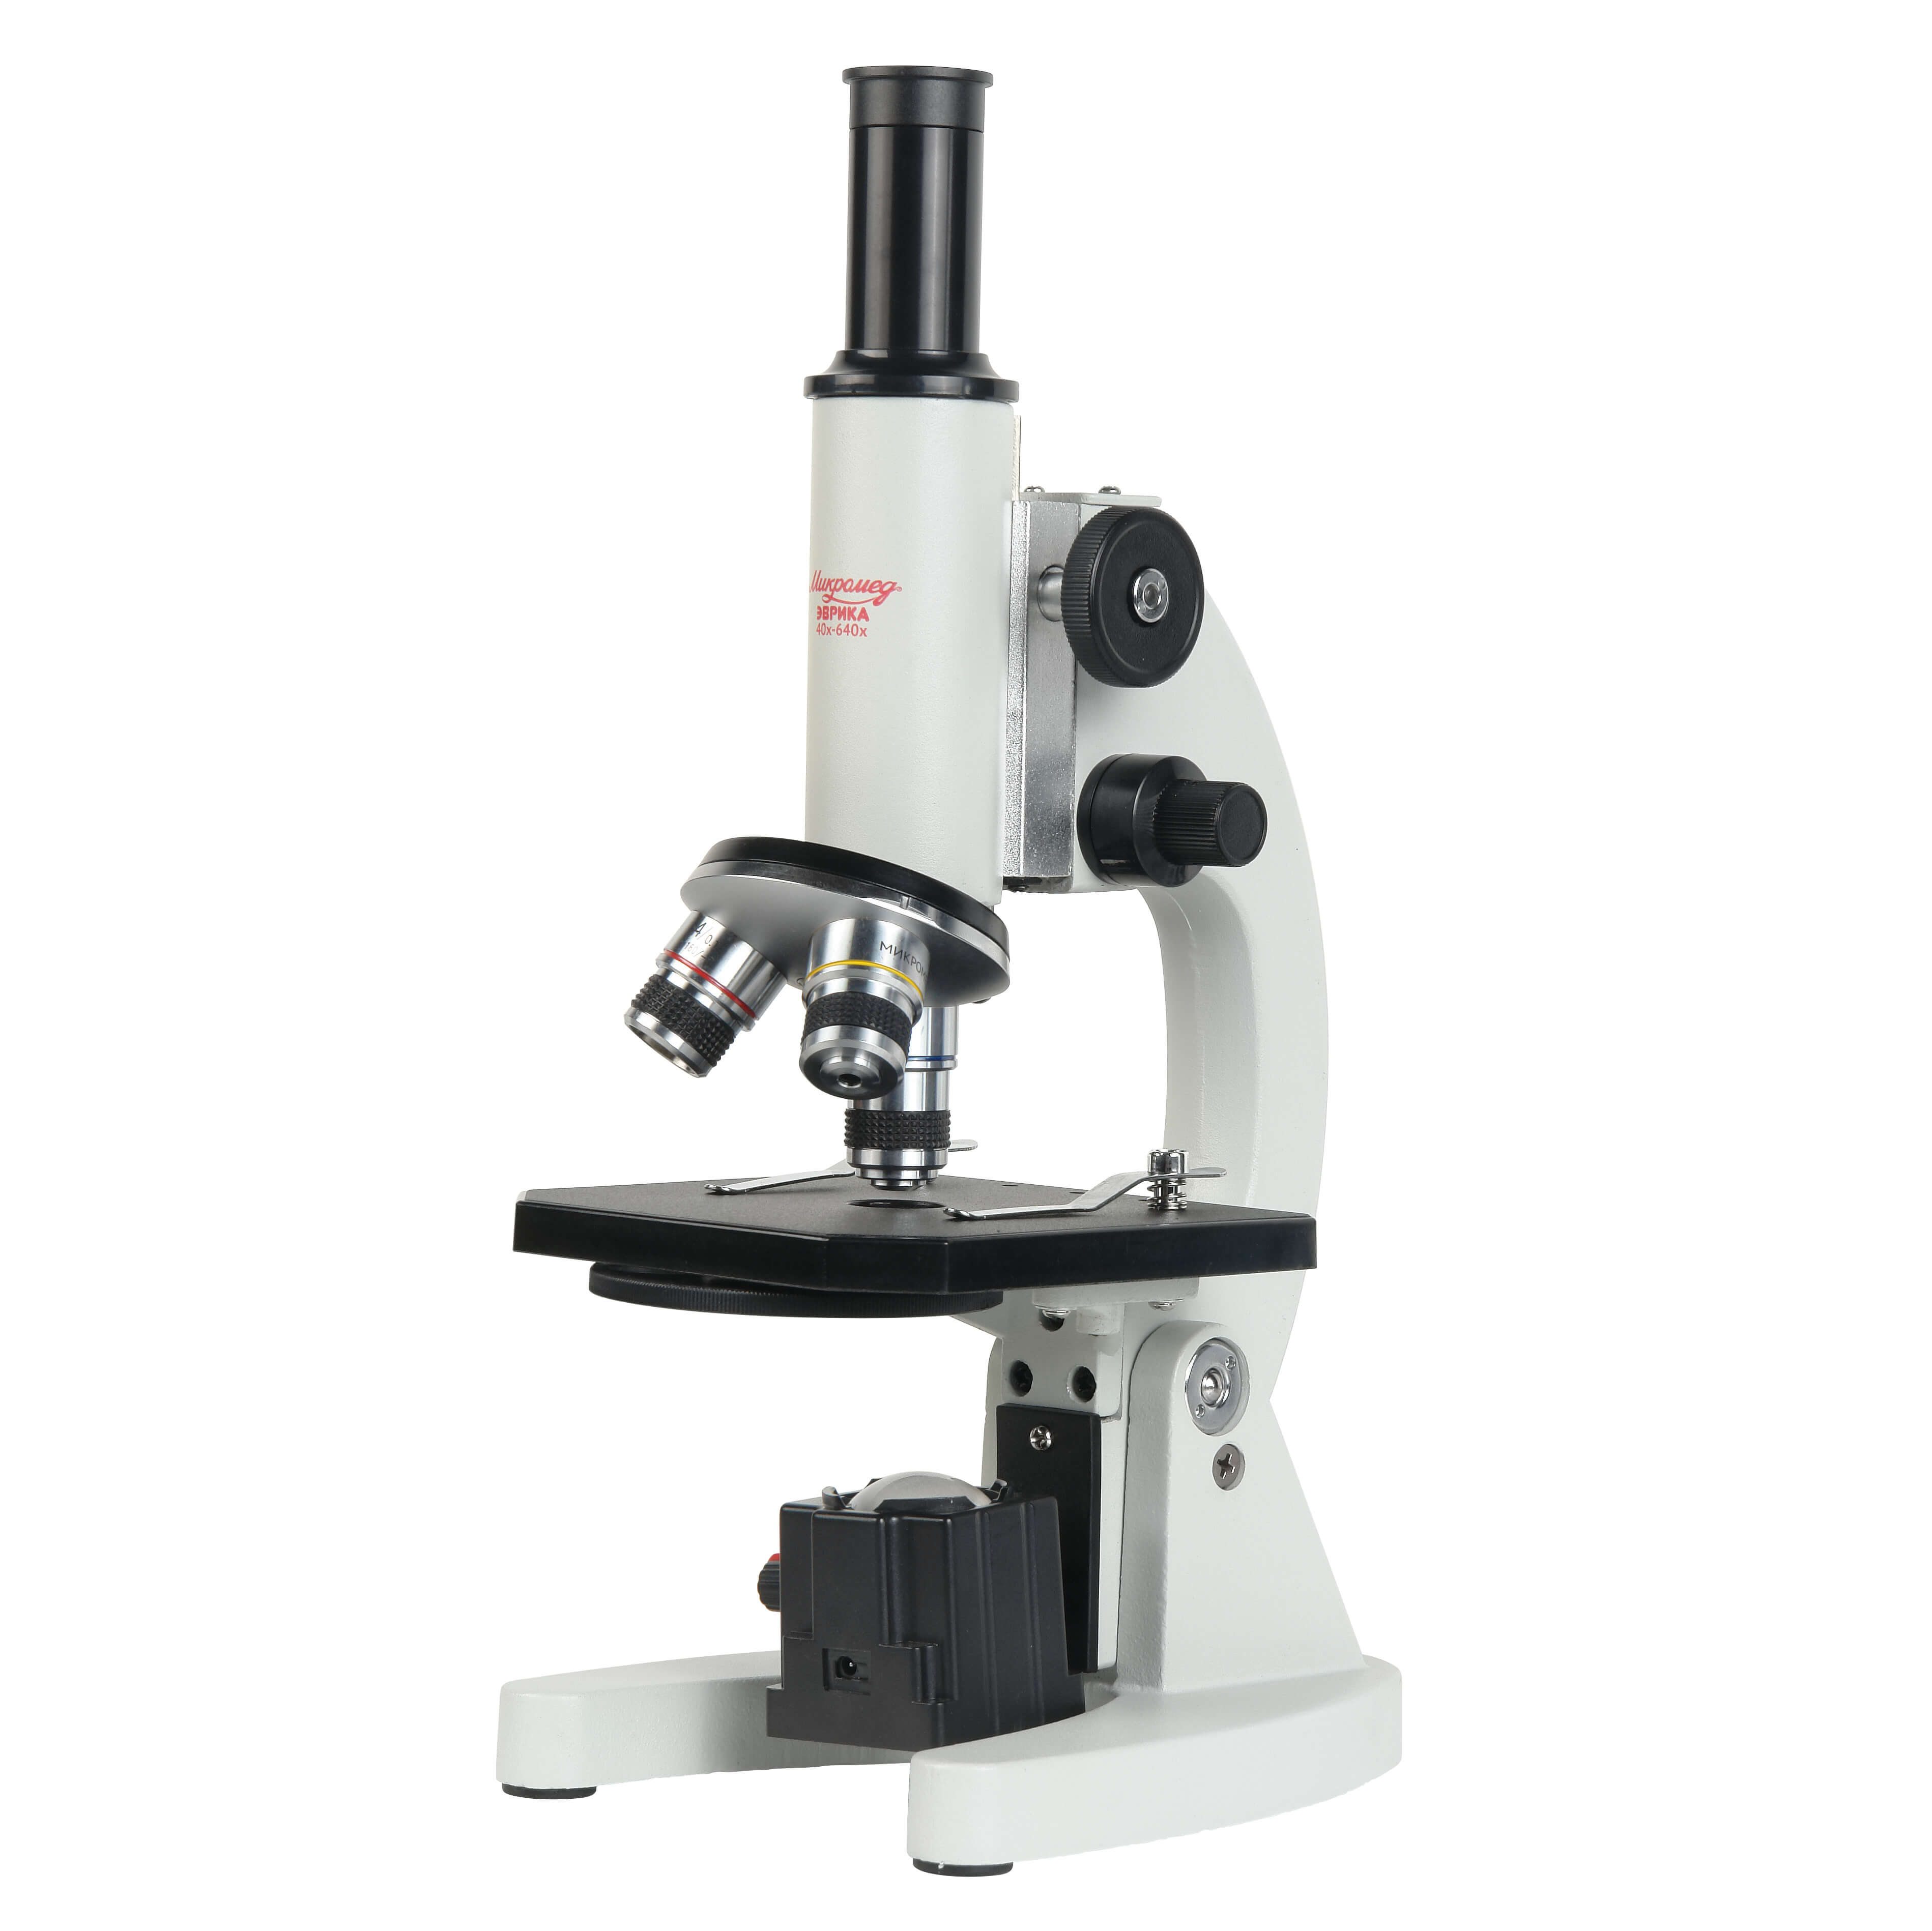 Микроскоп школьный Микромед Эврика 40х-640х (зеркало, LED) 28135 микроскоп школьный микромед эврика 40х 320х аметист инвертированный